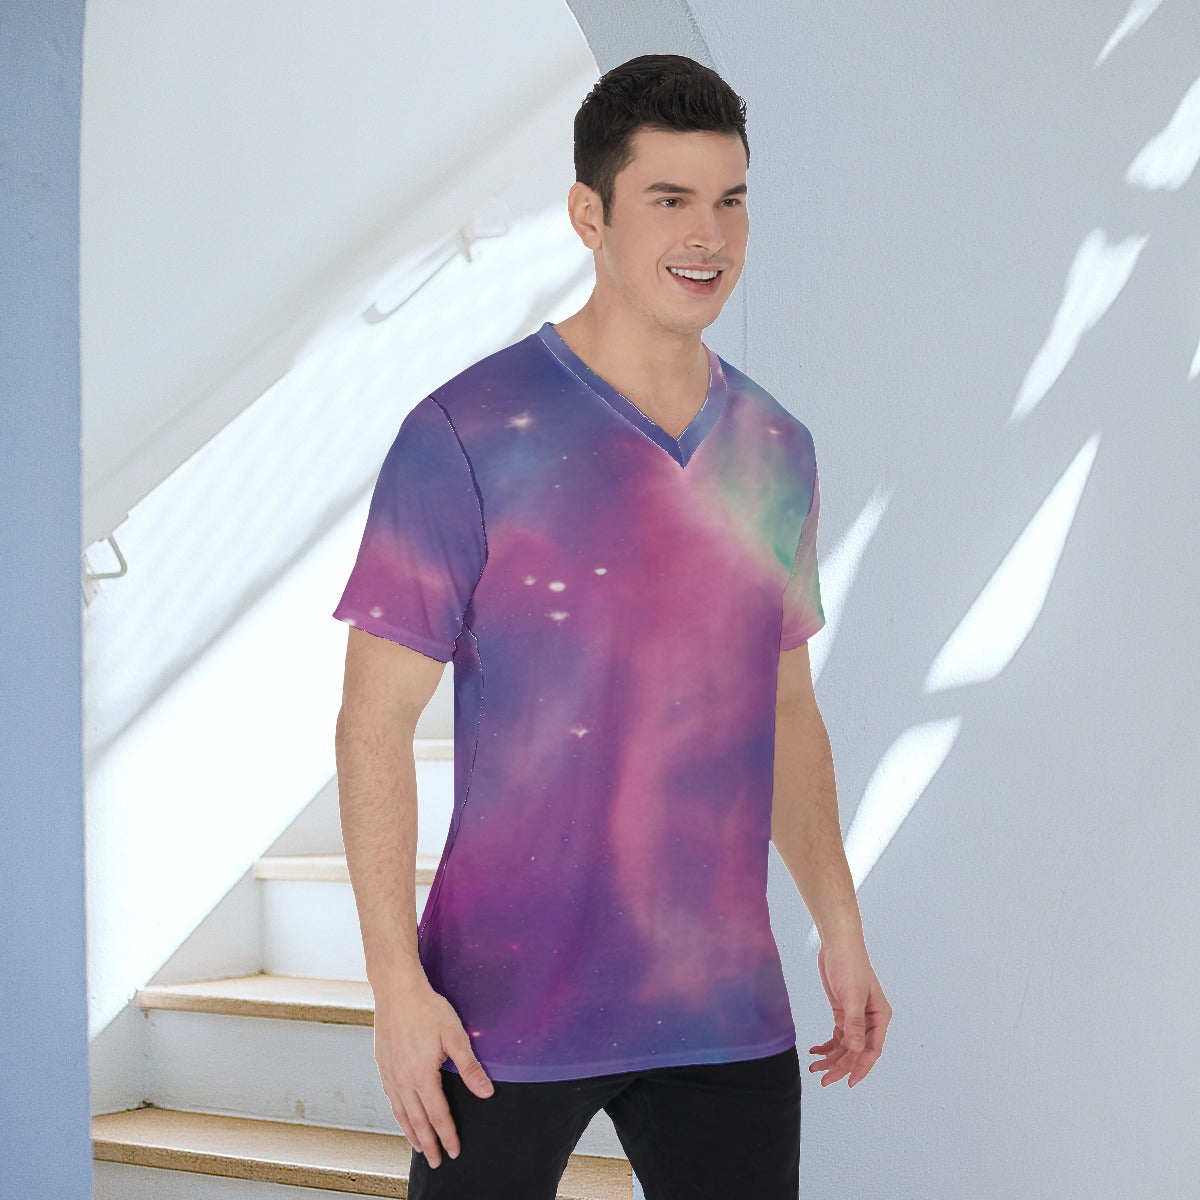 Vibrant Iridescent Cosmic Nebula Fashion Men's V-Neck T-Shirt Tee The Nebula Palace: Spiritually Cosmic Fashion